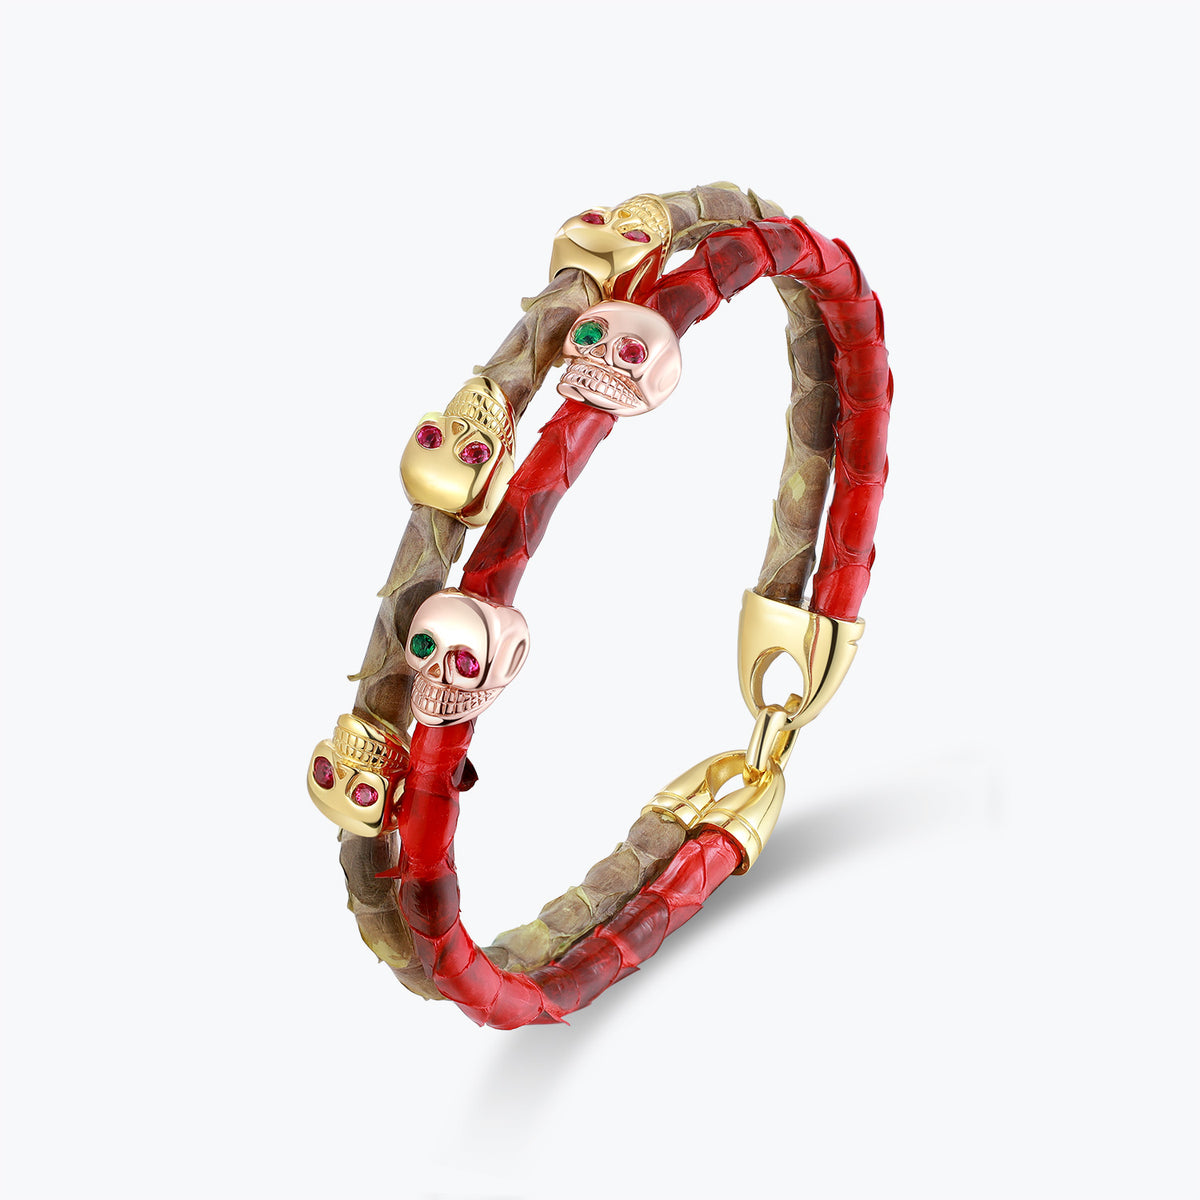 Dissoo® Luxury Genuine Python Leather Bracelet with Gold & Rose Gold Skulls